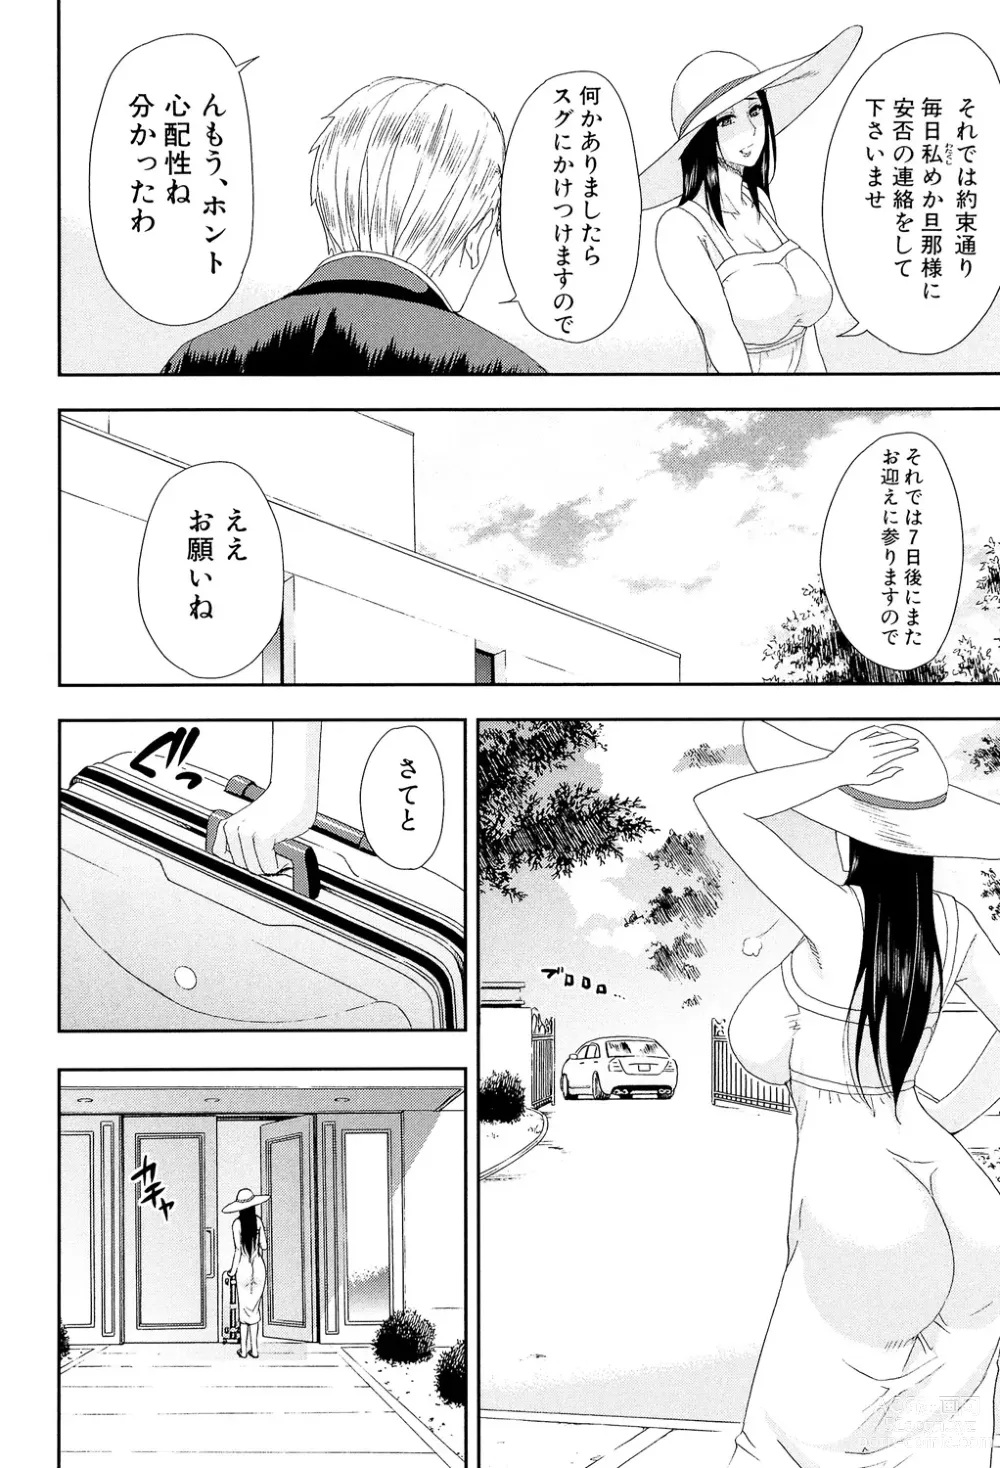 Page 6 of manga Hitokoishi, Tsuma